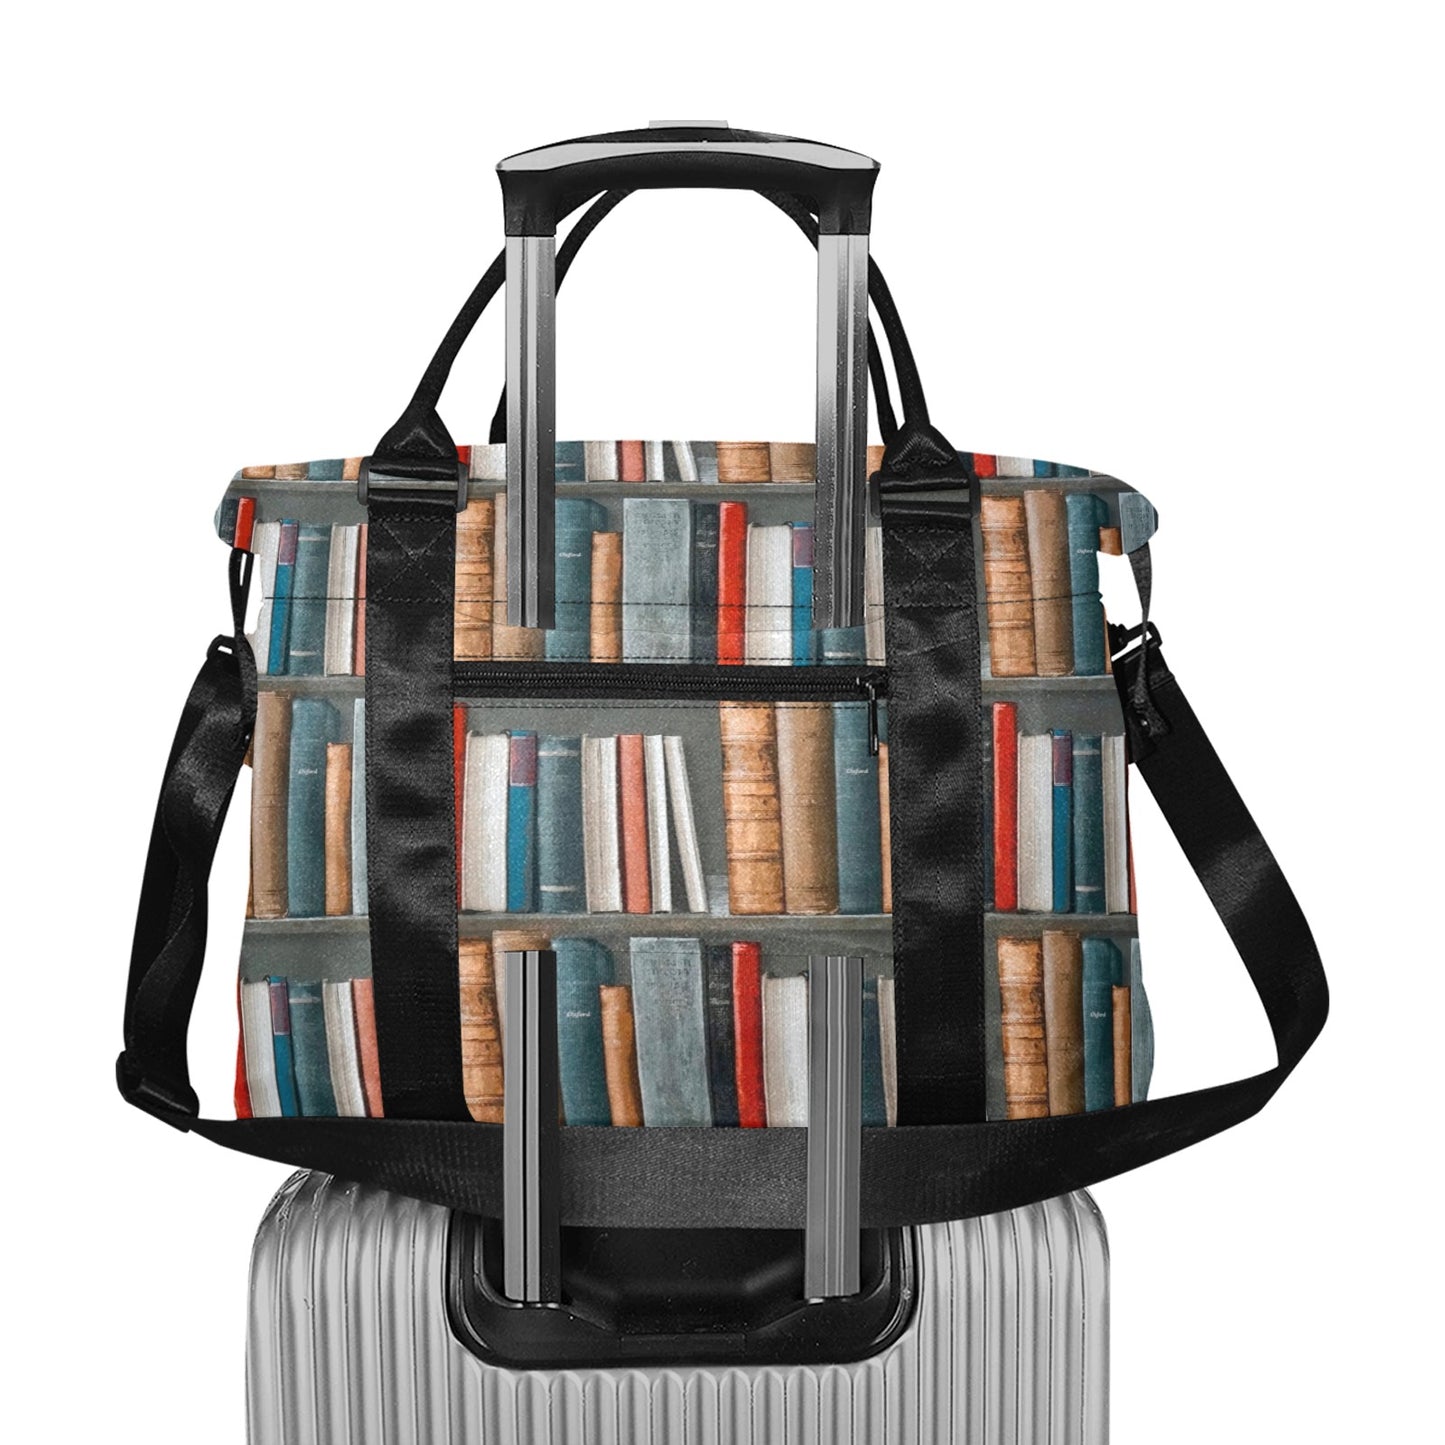 Books - Square Duffle Bag Square Duffle Bag